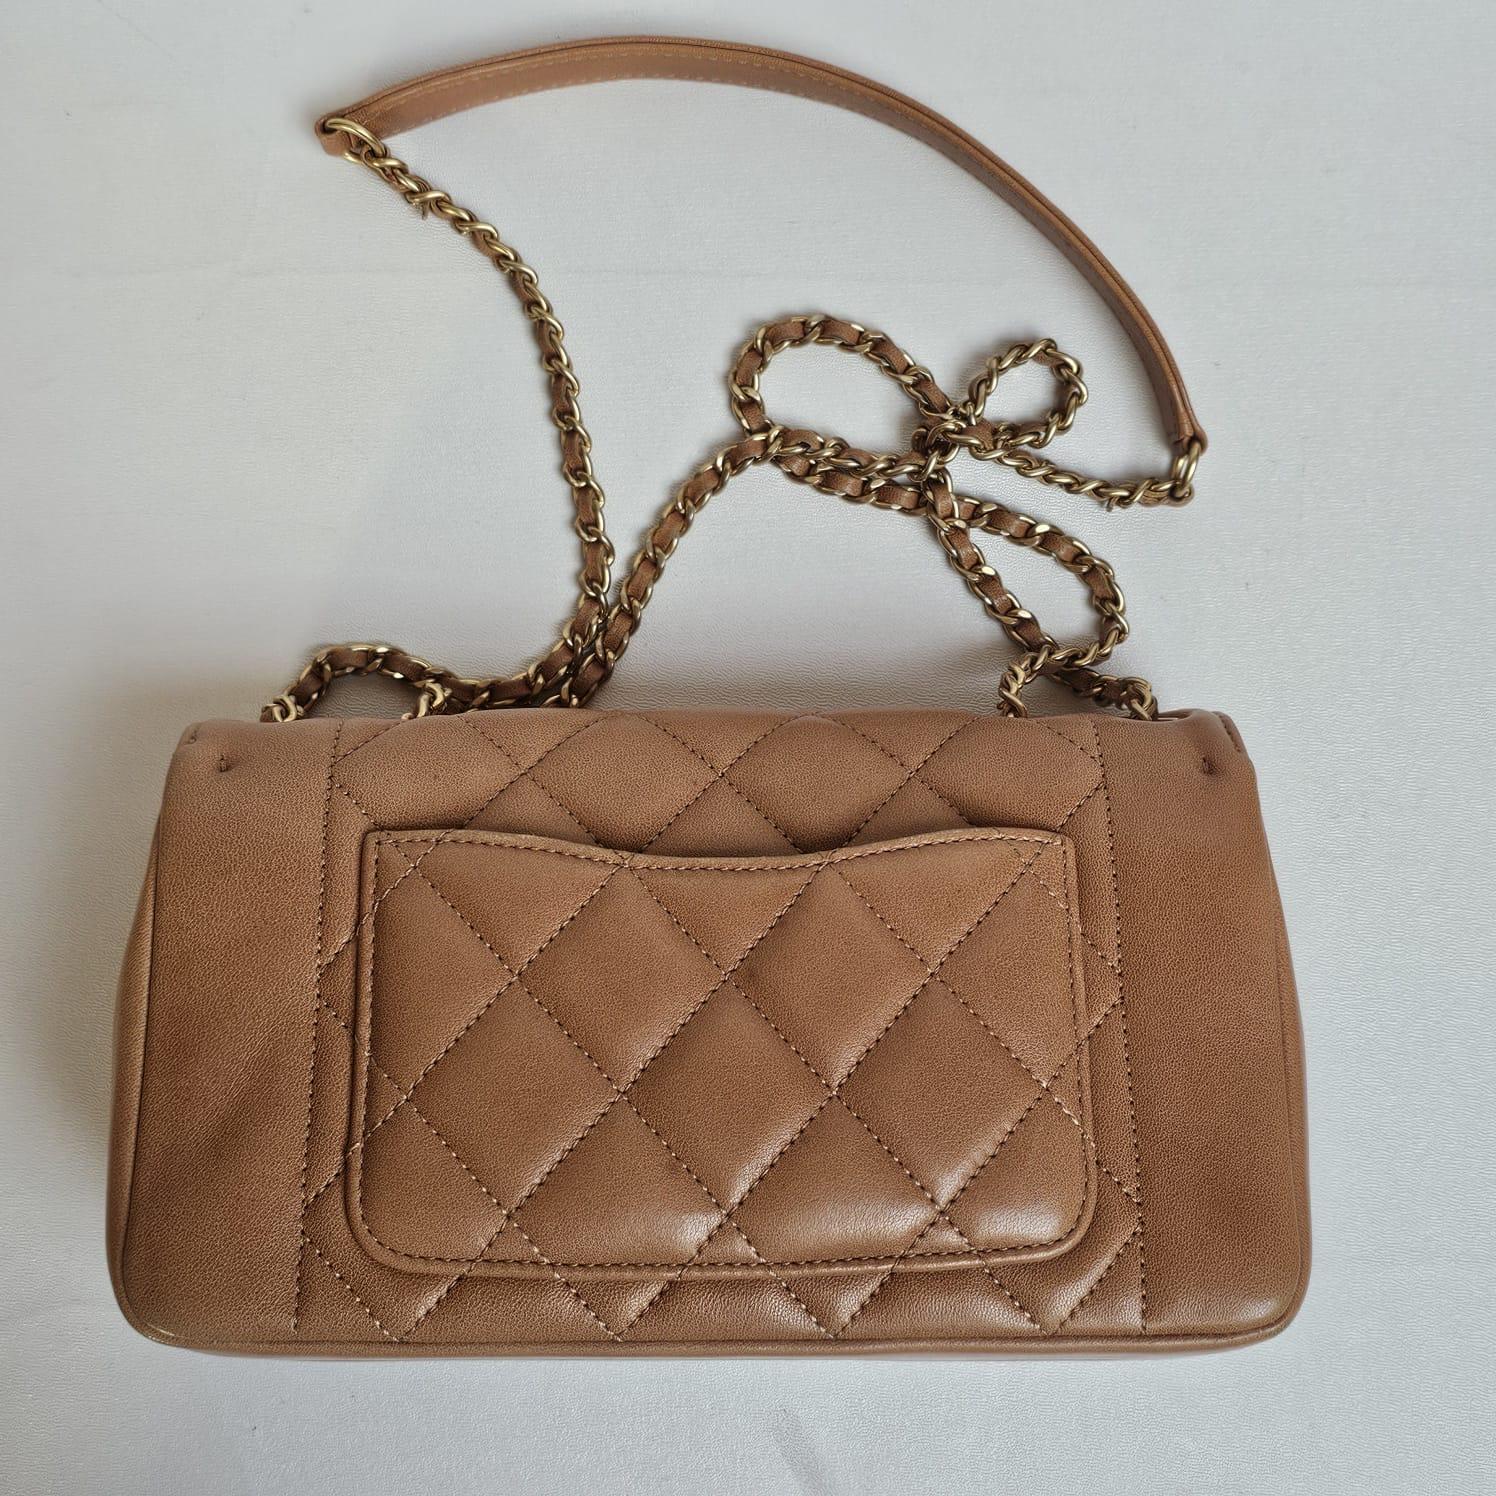 2014-2015 Chanel Caramel Diana Flap Bag For Sale 6